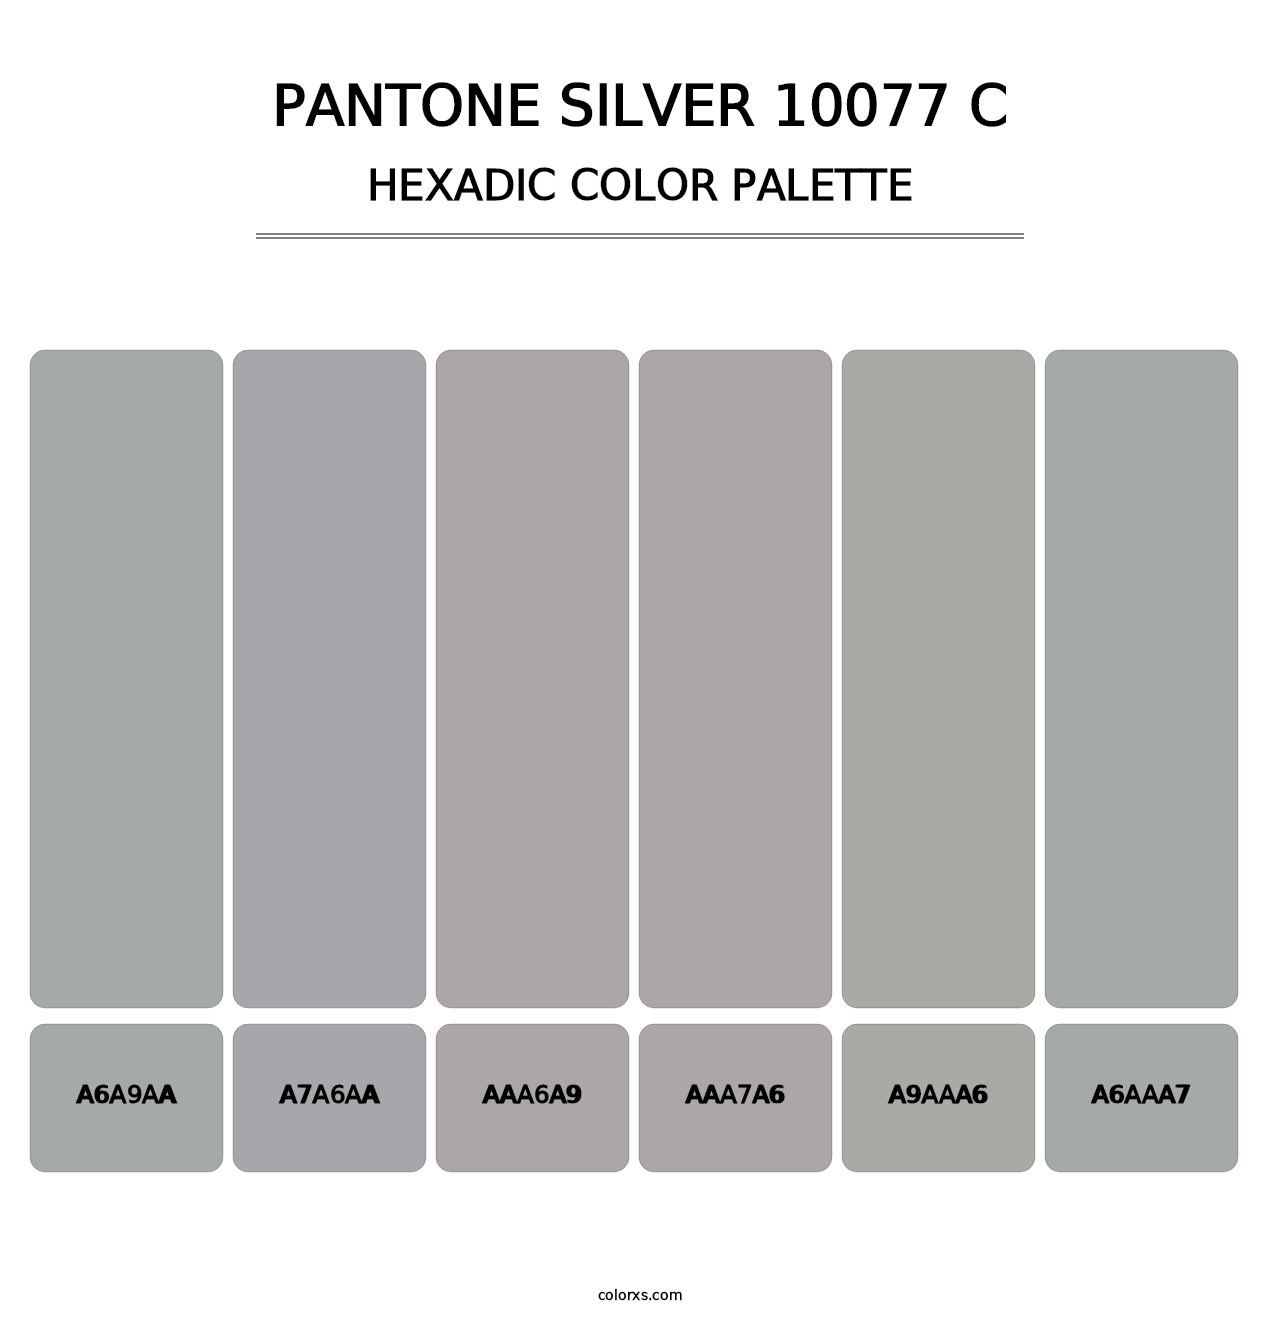 PANTONE Silver 10077 C - Hexadic Color Palette